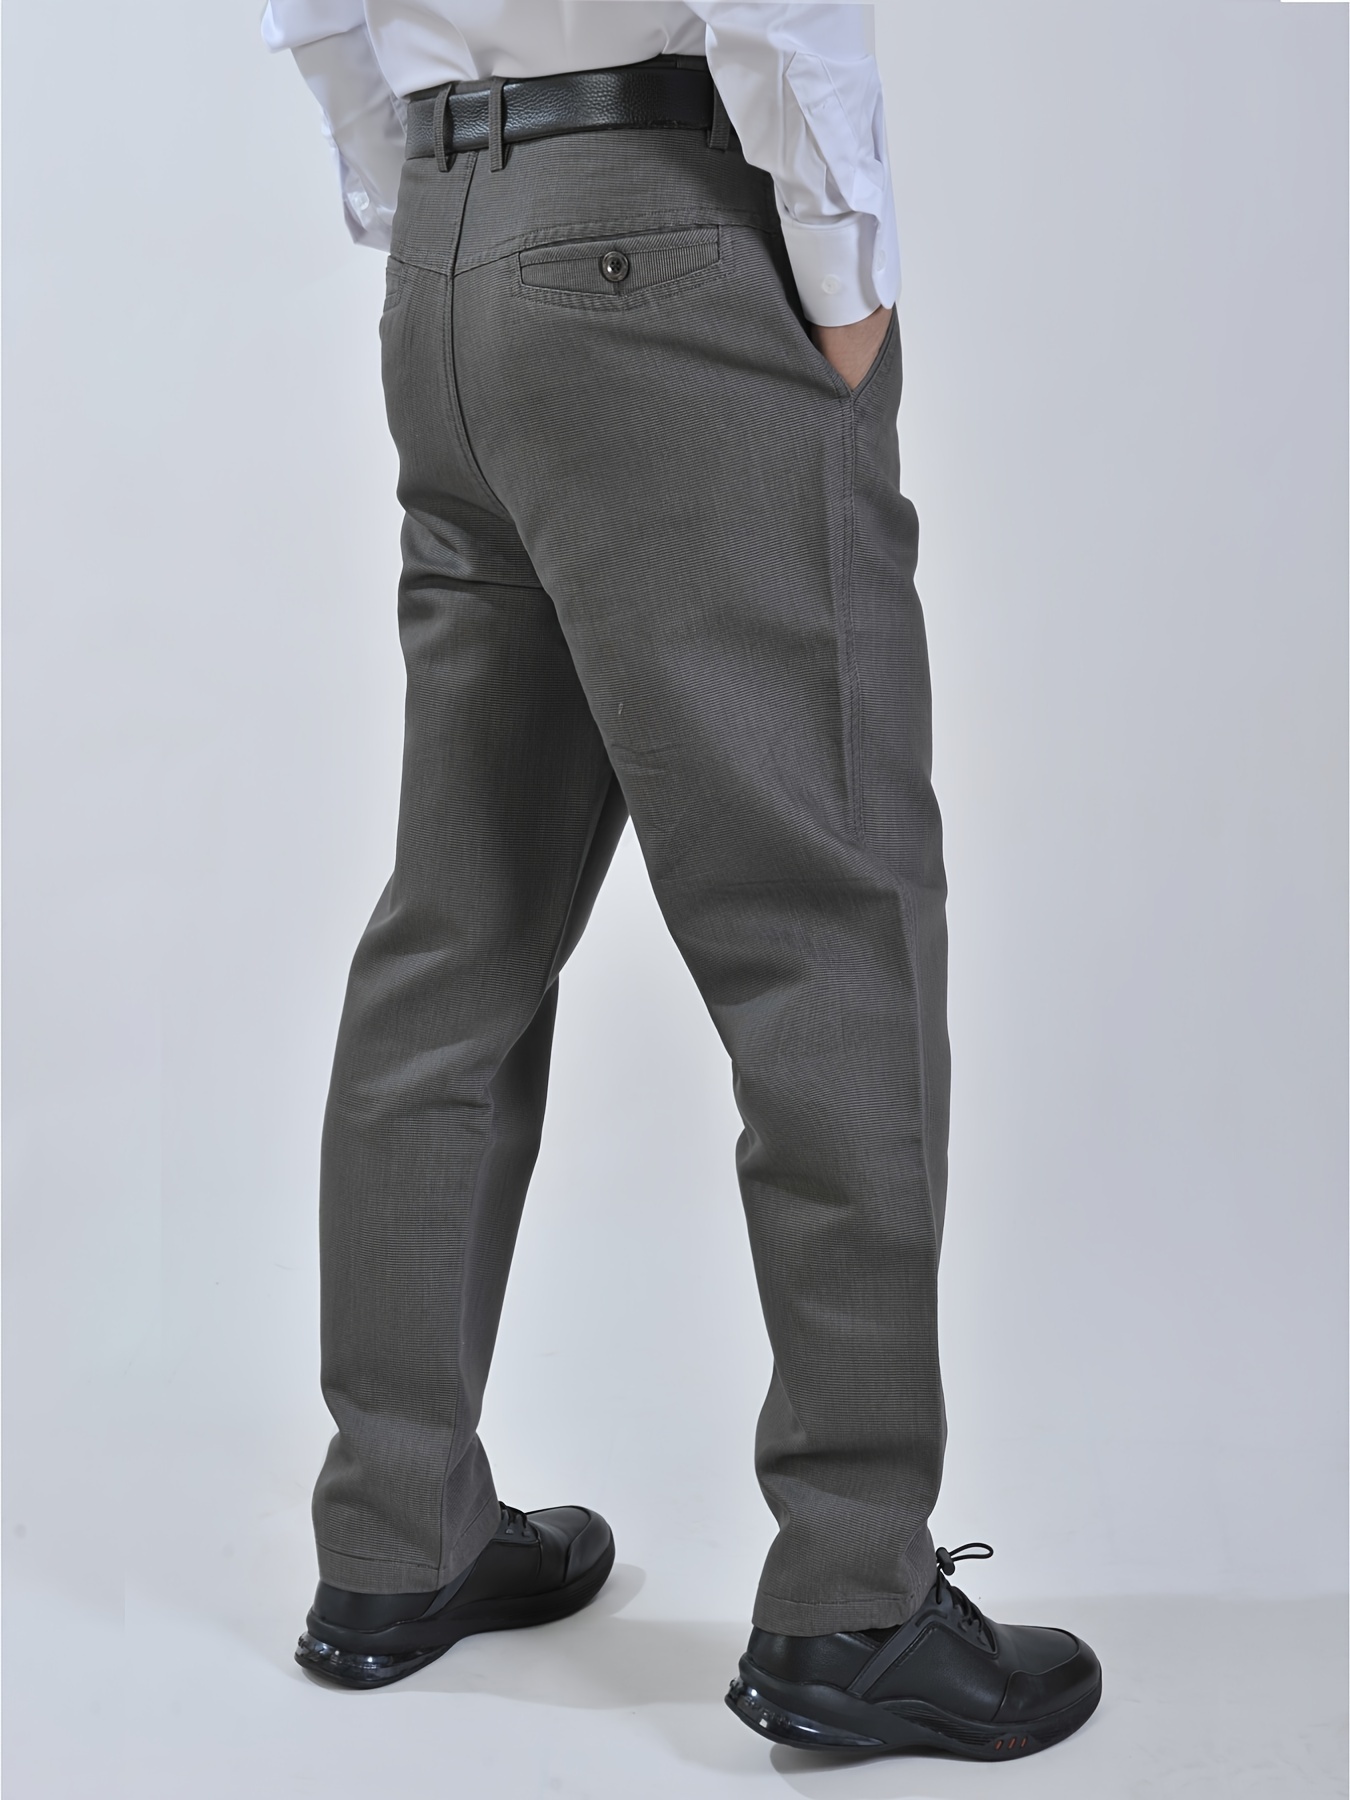 Men's Suit Trousers, Formal & Casual